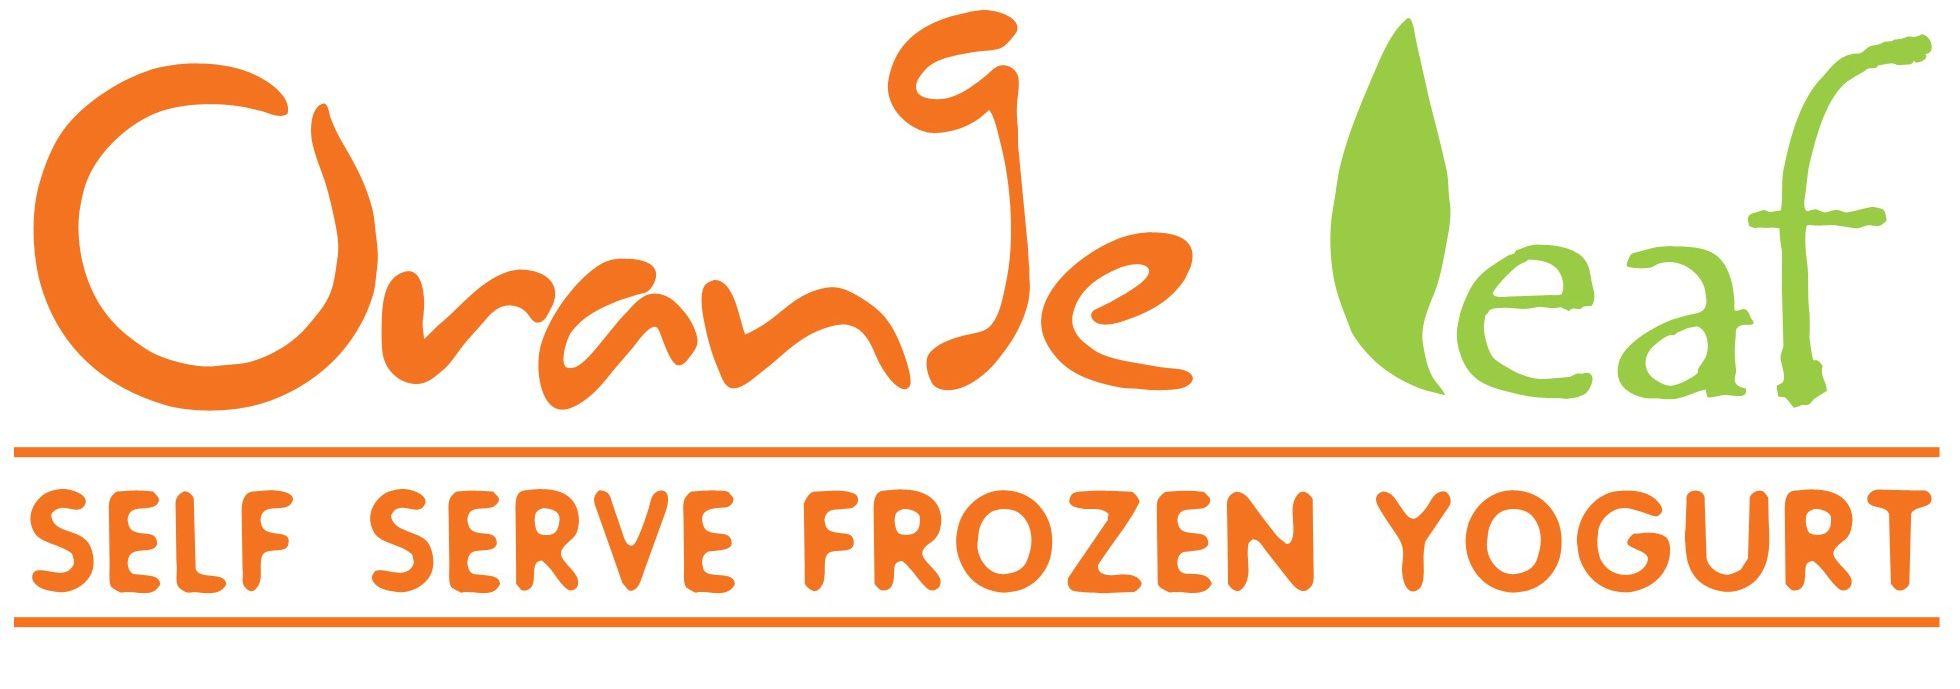 Orange Leaf Frozen Yogurt Logo - Ries' Pieces: The Fro Yo Wars Explained